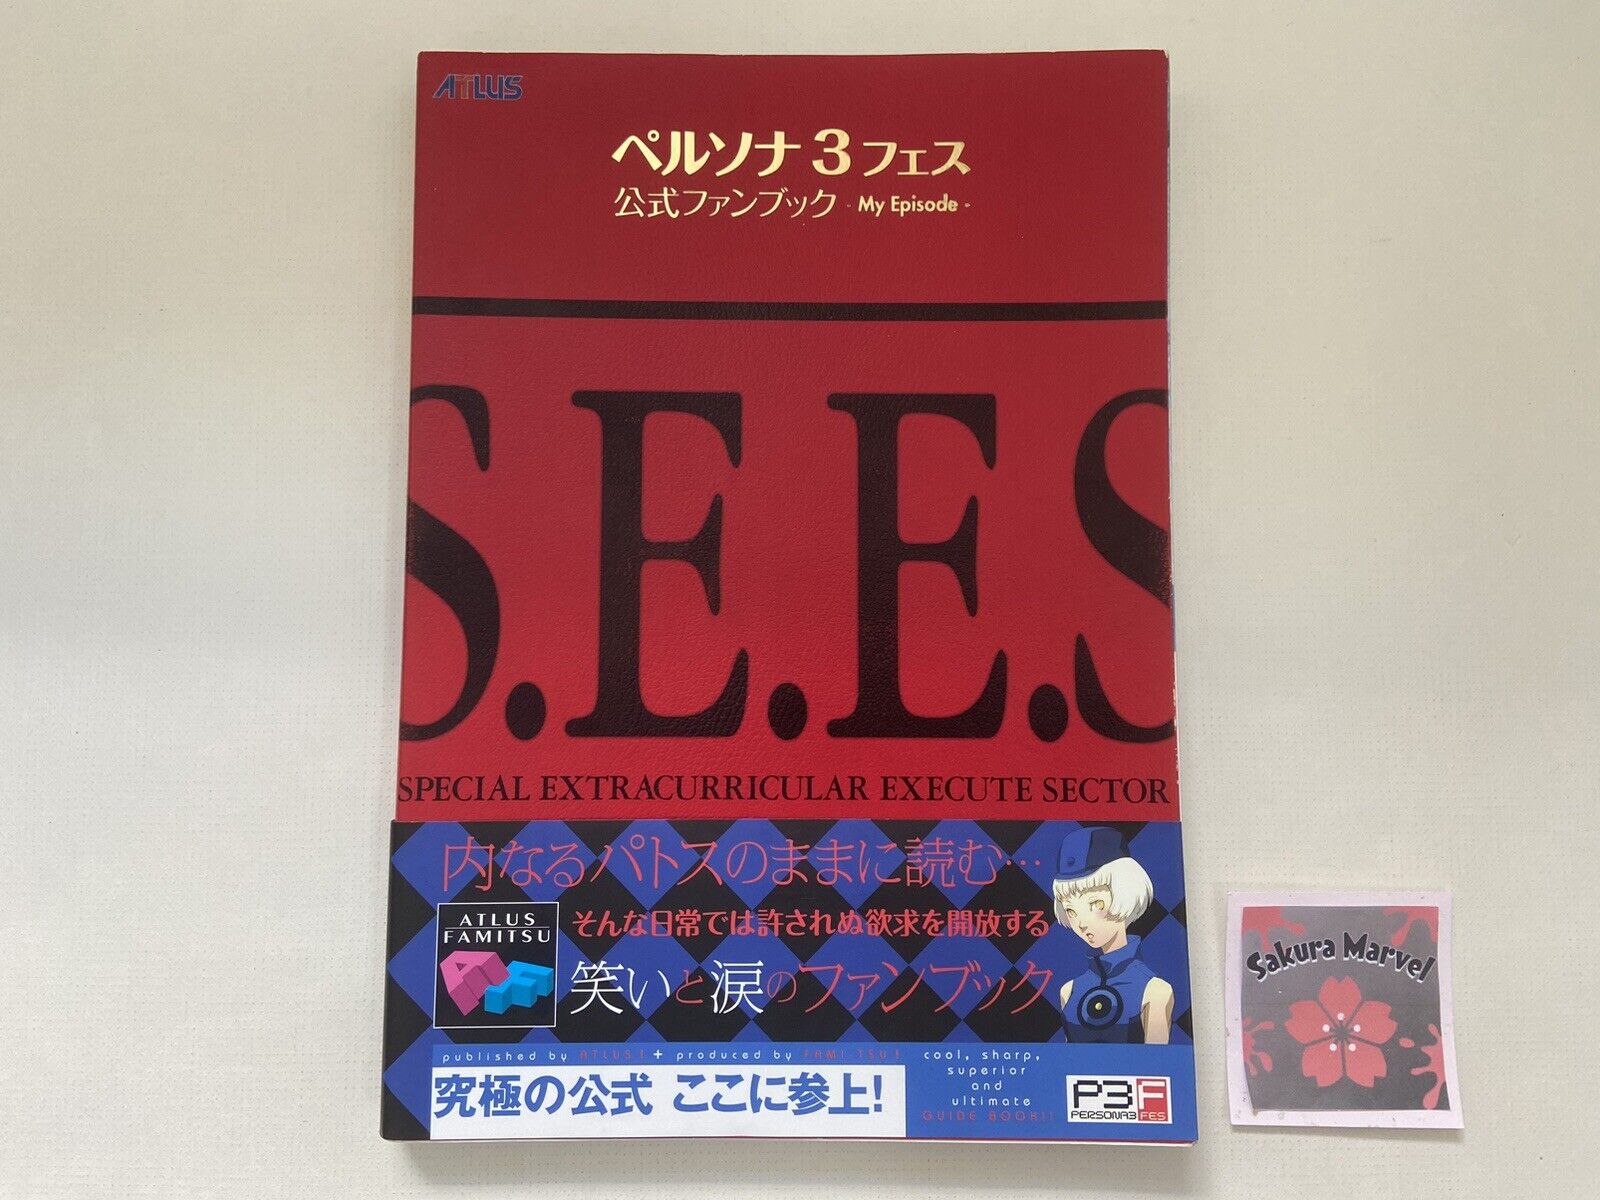 Persona 3 Fes Official Fanbook My Episode S.E.E.S Guide book Atlus Famitsu Japan